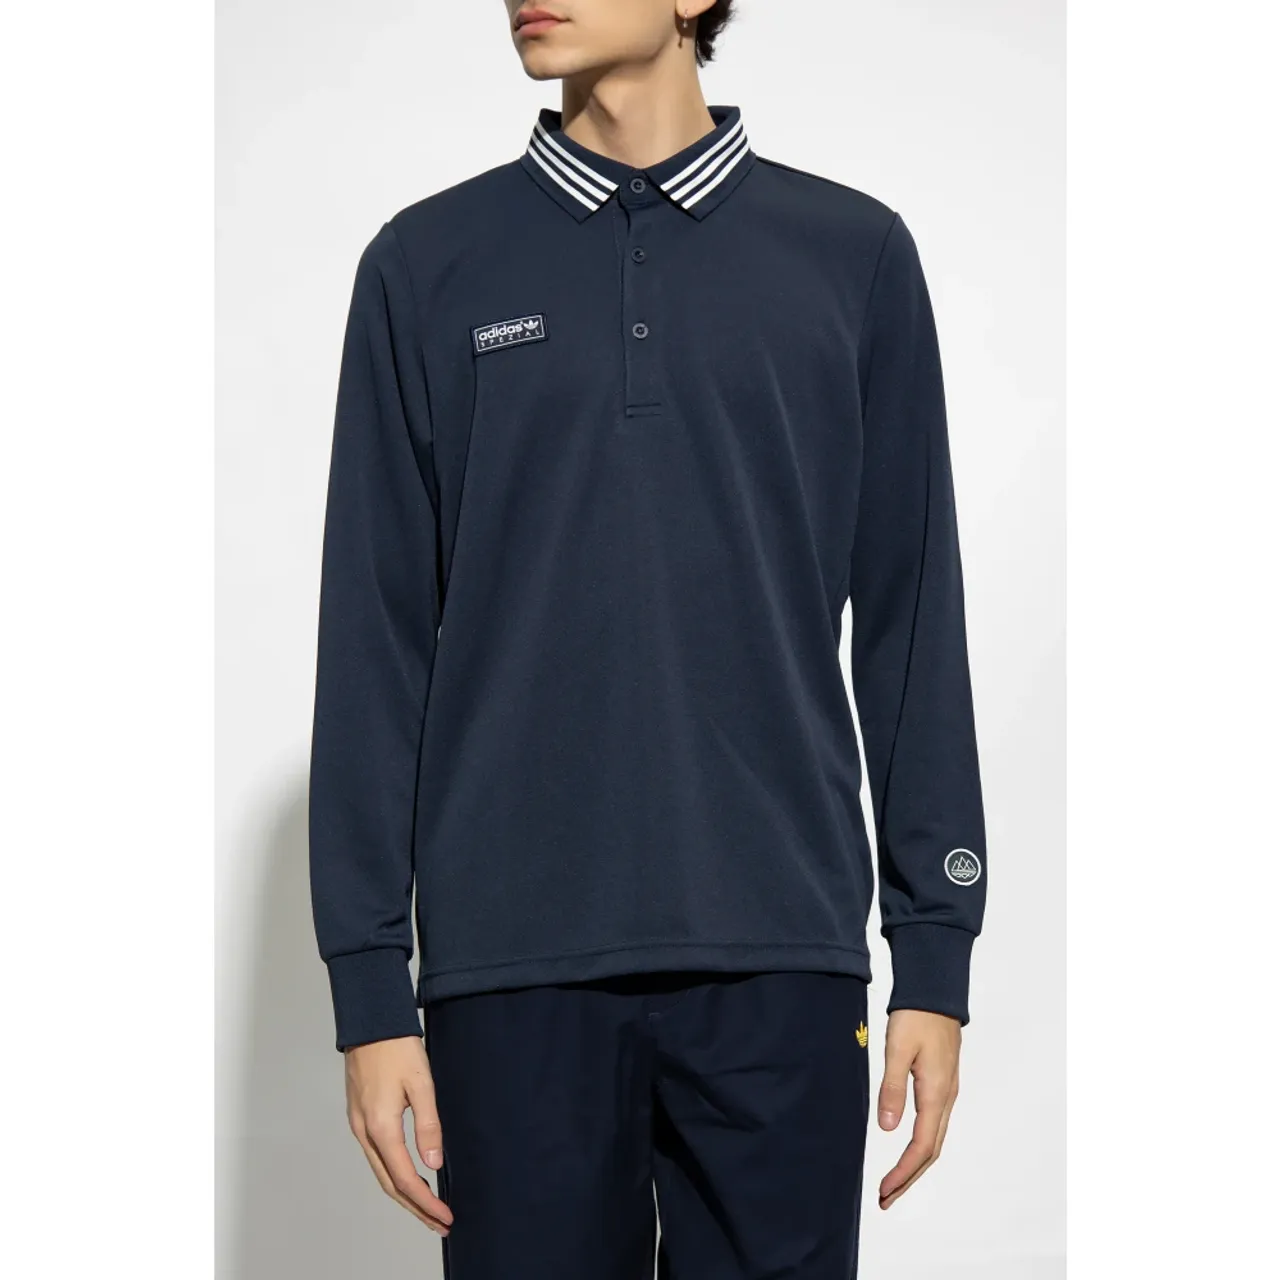 ‘Spezial’ Kollektion Poloshirt Adidas Originals